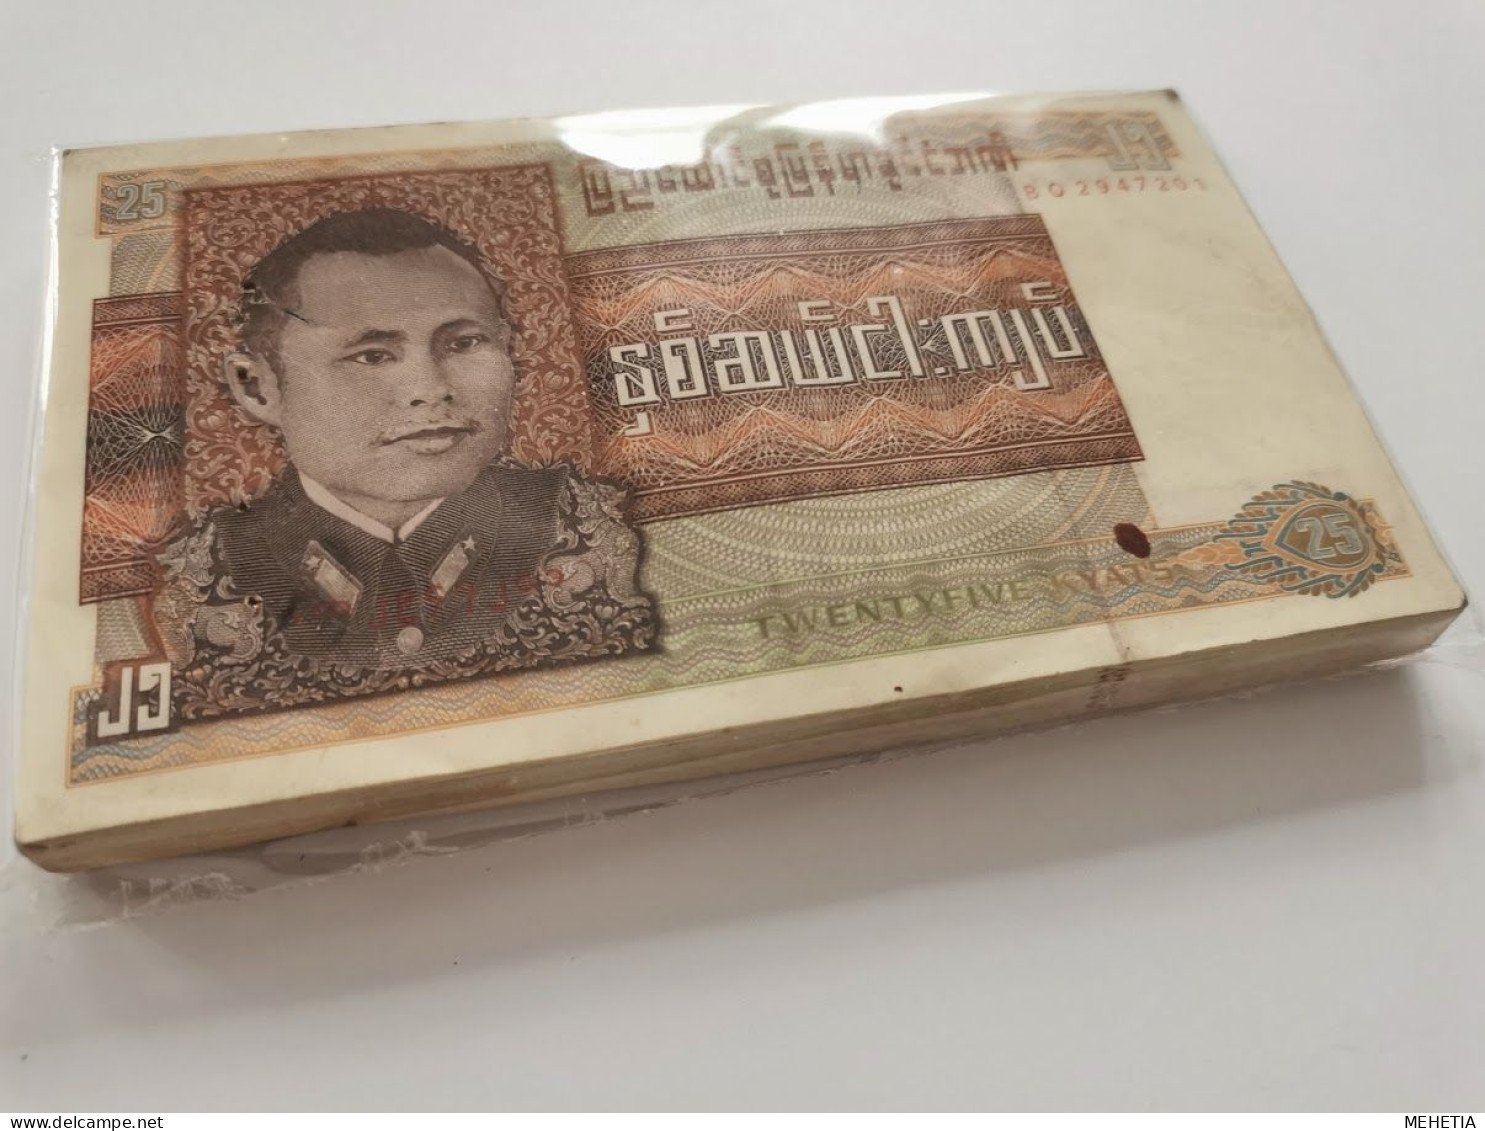 1972 Birmanie Burma Liasse 100 Billets Neufs Full Bundle Of 100 X 25 Kyat Uncirculated P 59 General Aung San - Myanmar